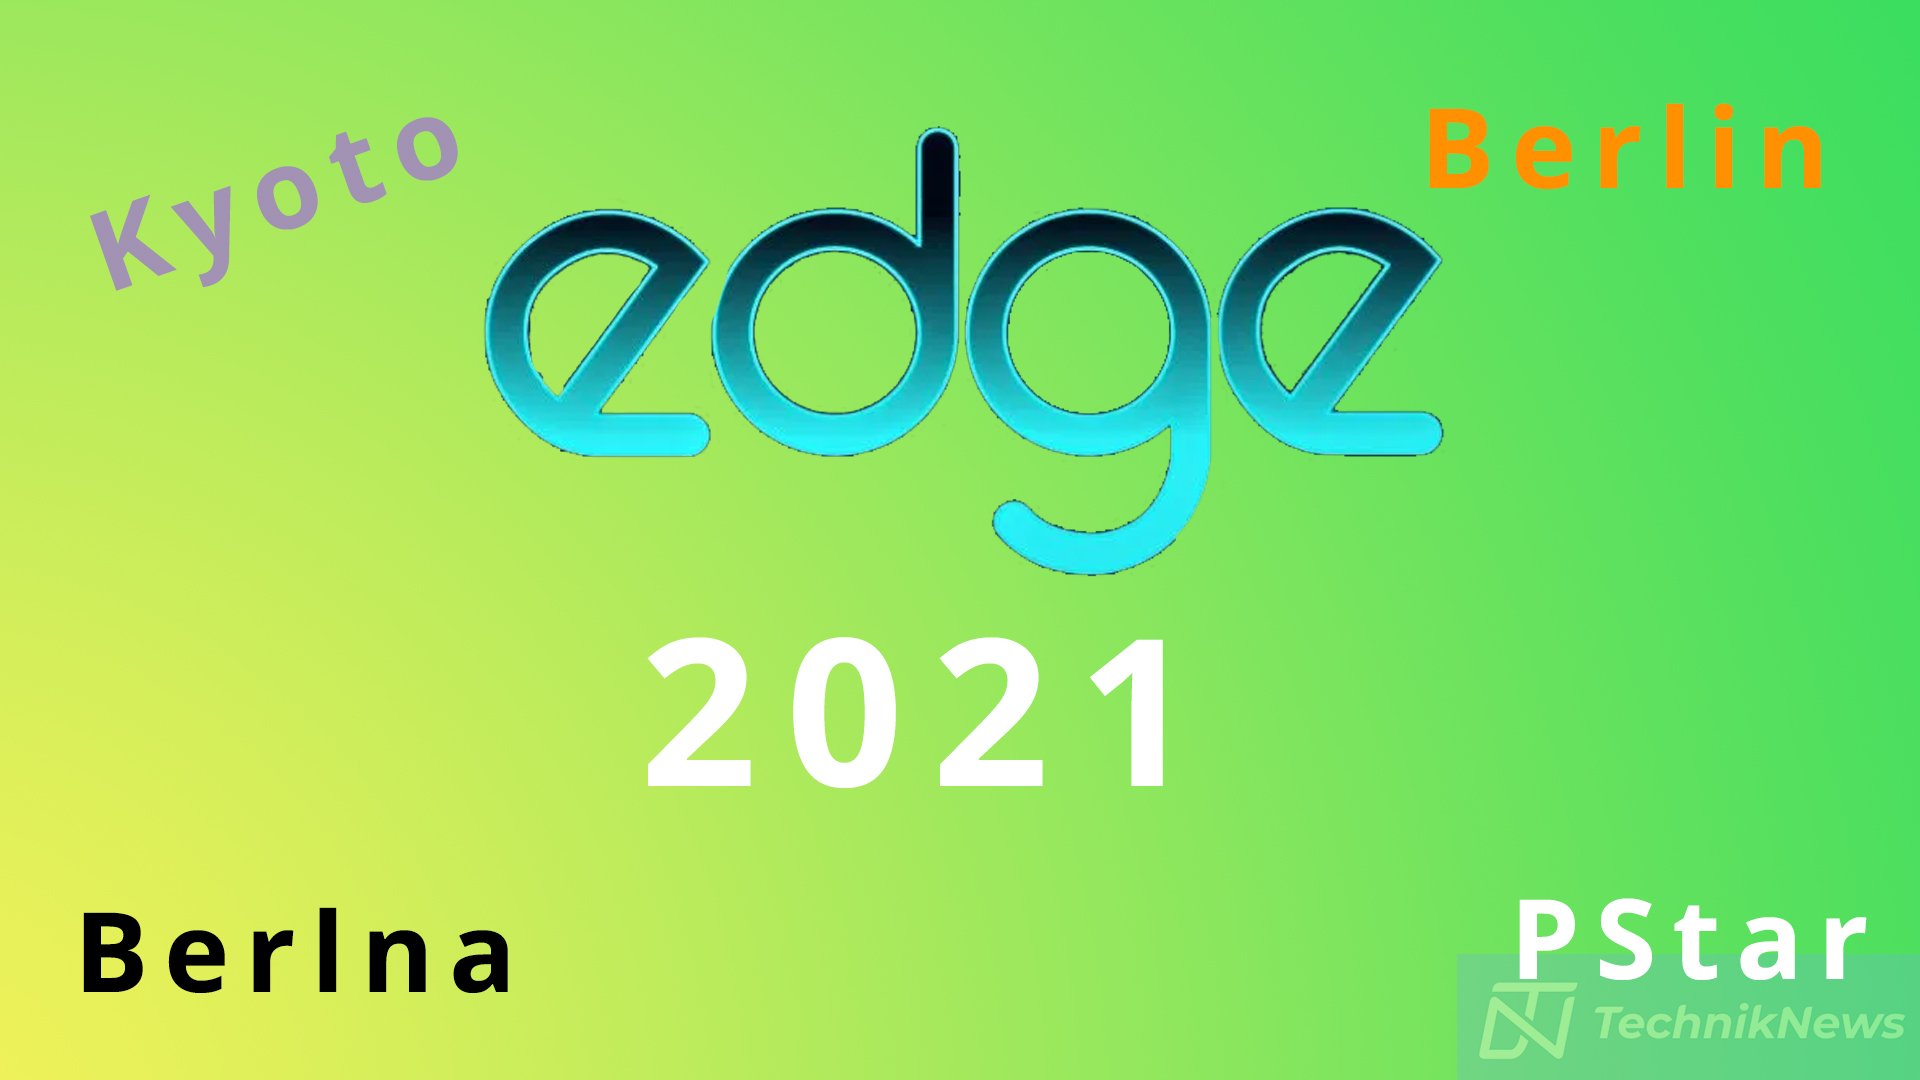 Motorola Edge 2021 cover picture